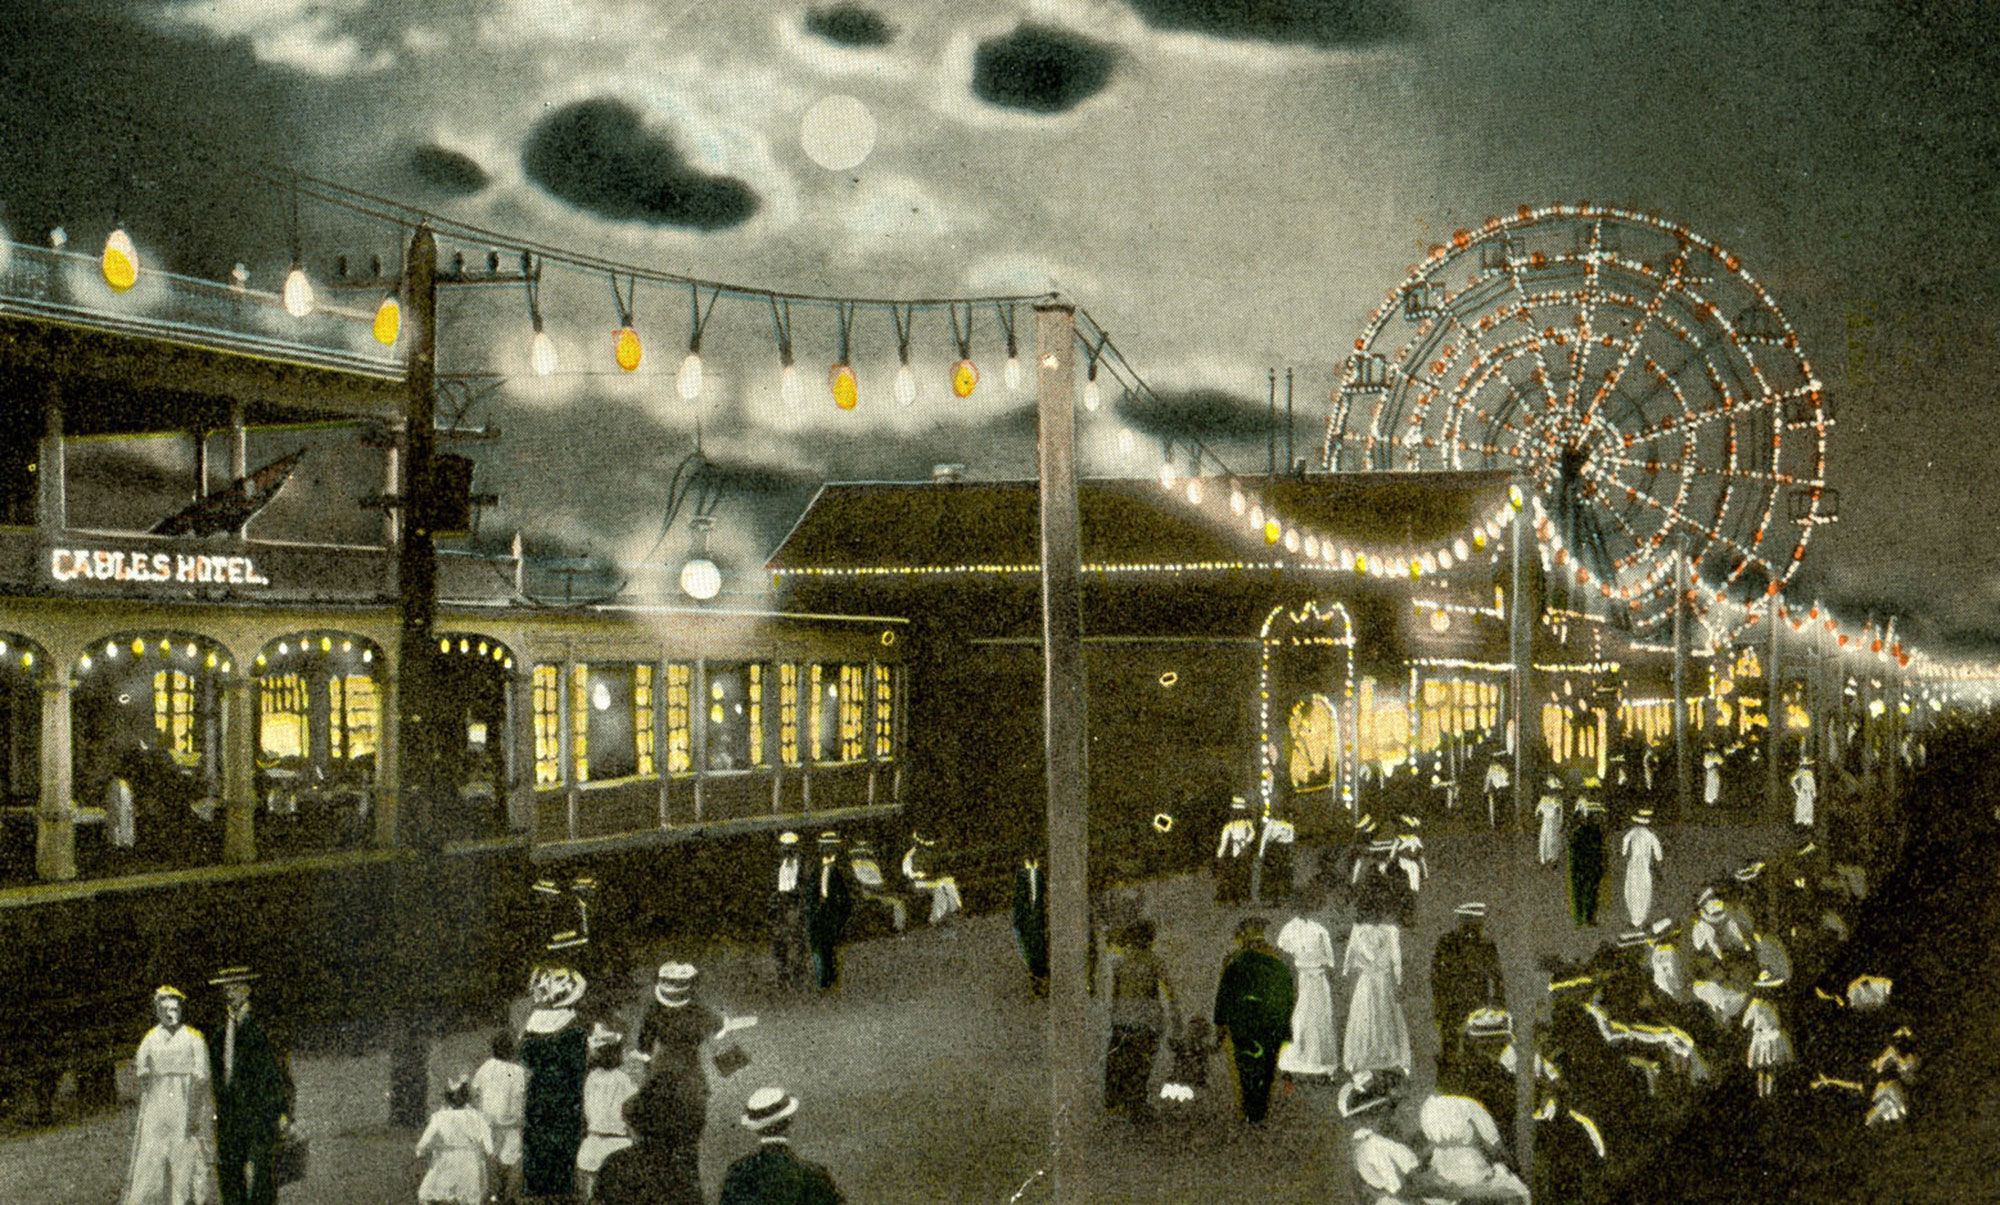 Night scene at midland beach postcard